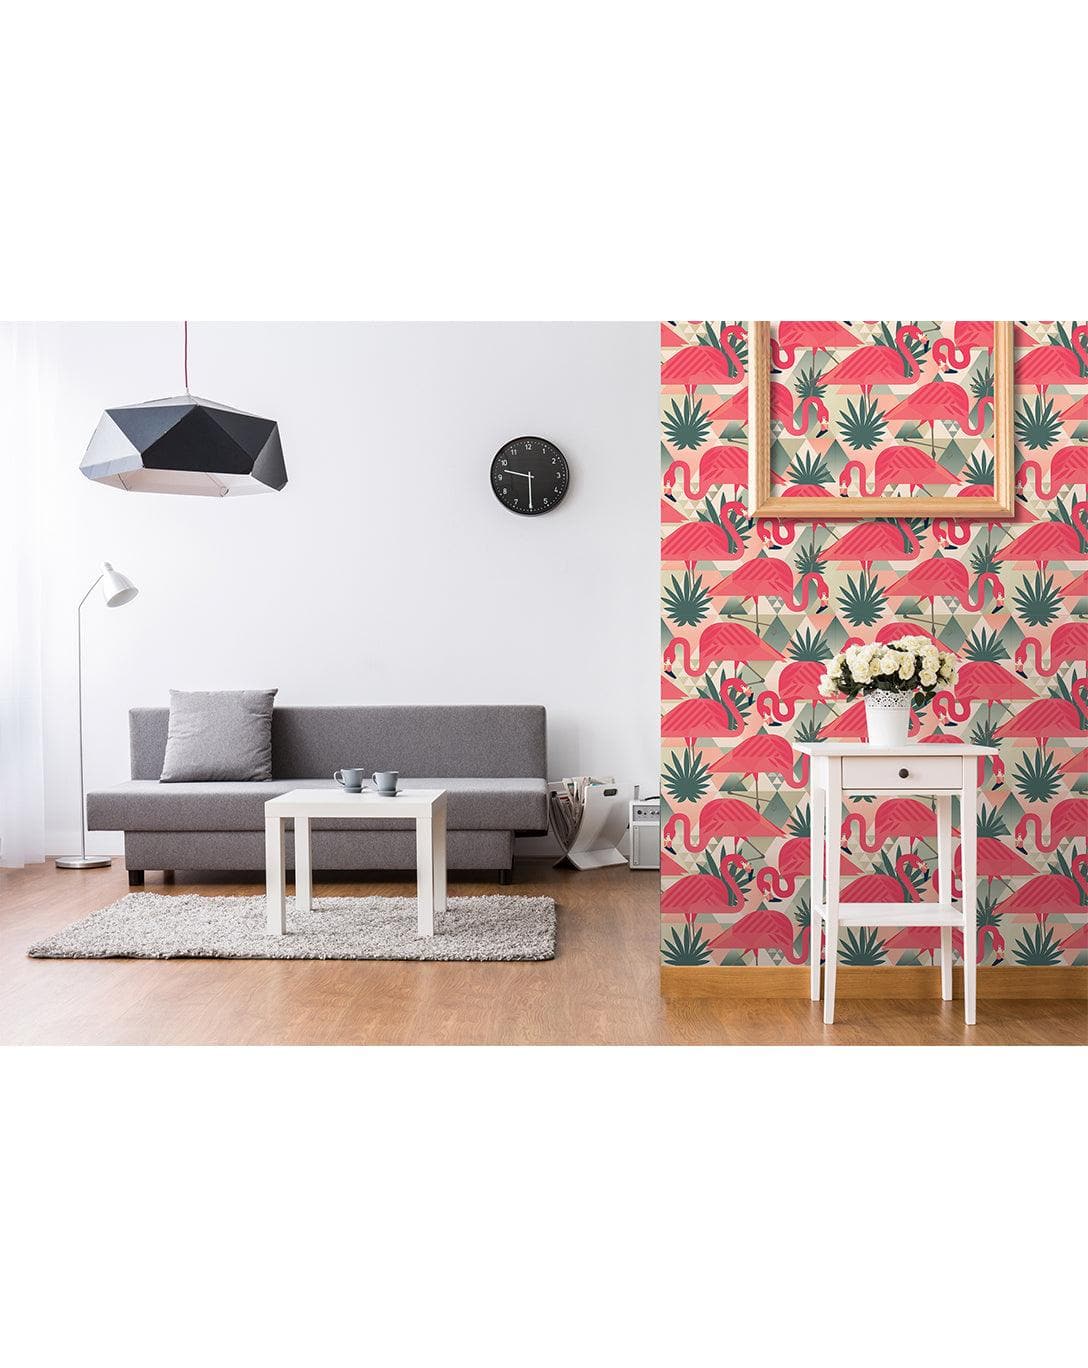 Geometric Tropical Pink Flamingo Removable Wallpaper 